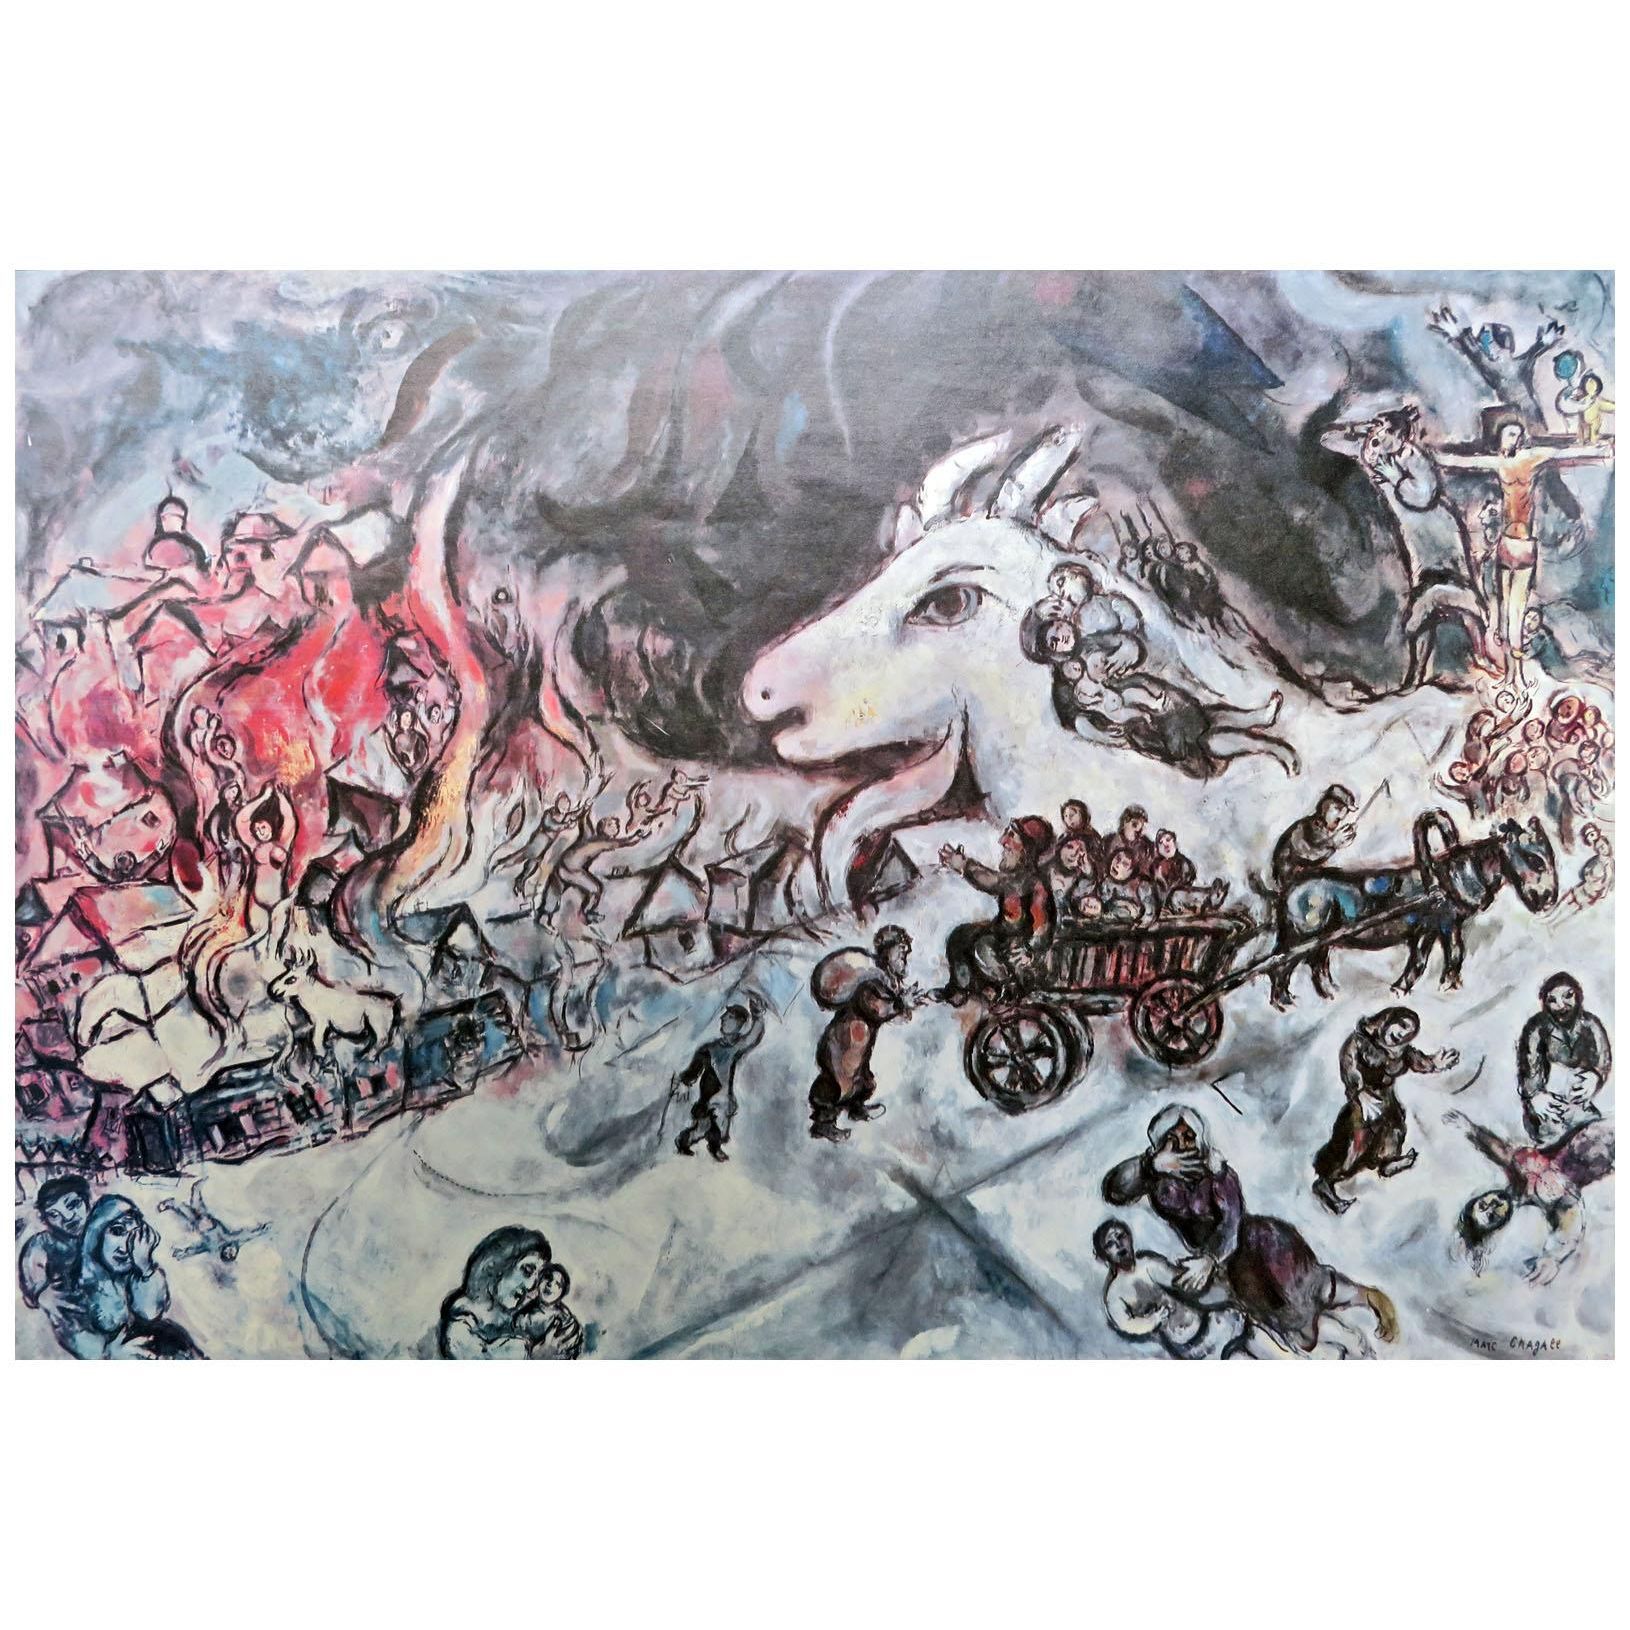 Марк Шагал. Война. 1964. Музей Тиссен-Борнемиса, Мадрид